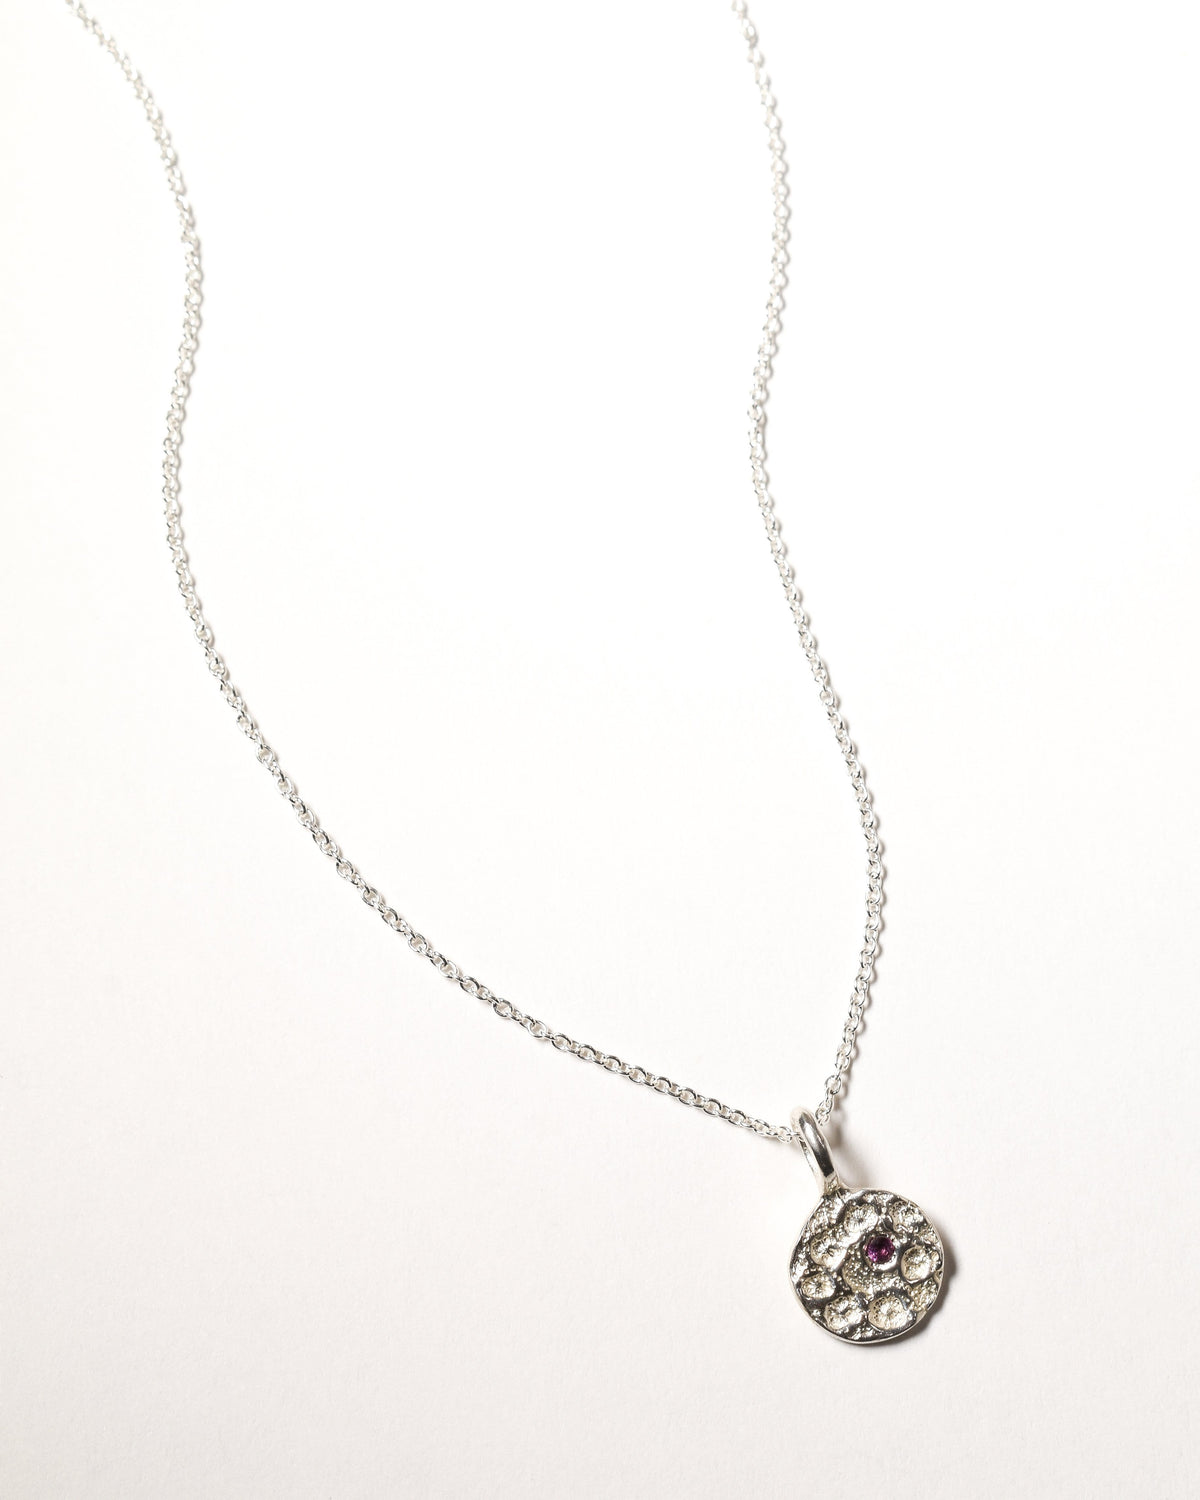 Garnet Birthstone Necklace - January - Sterling Silver